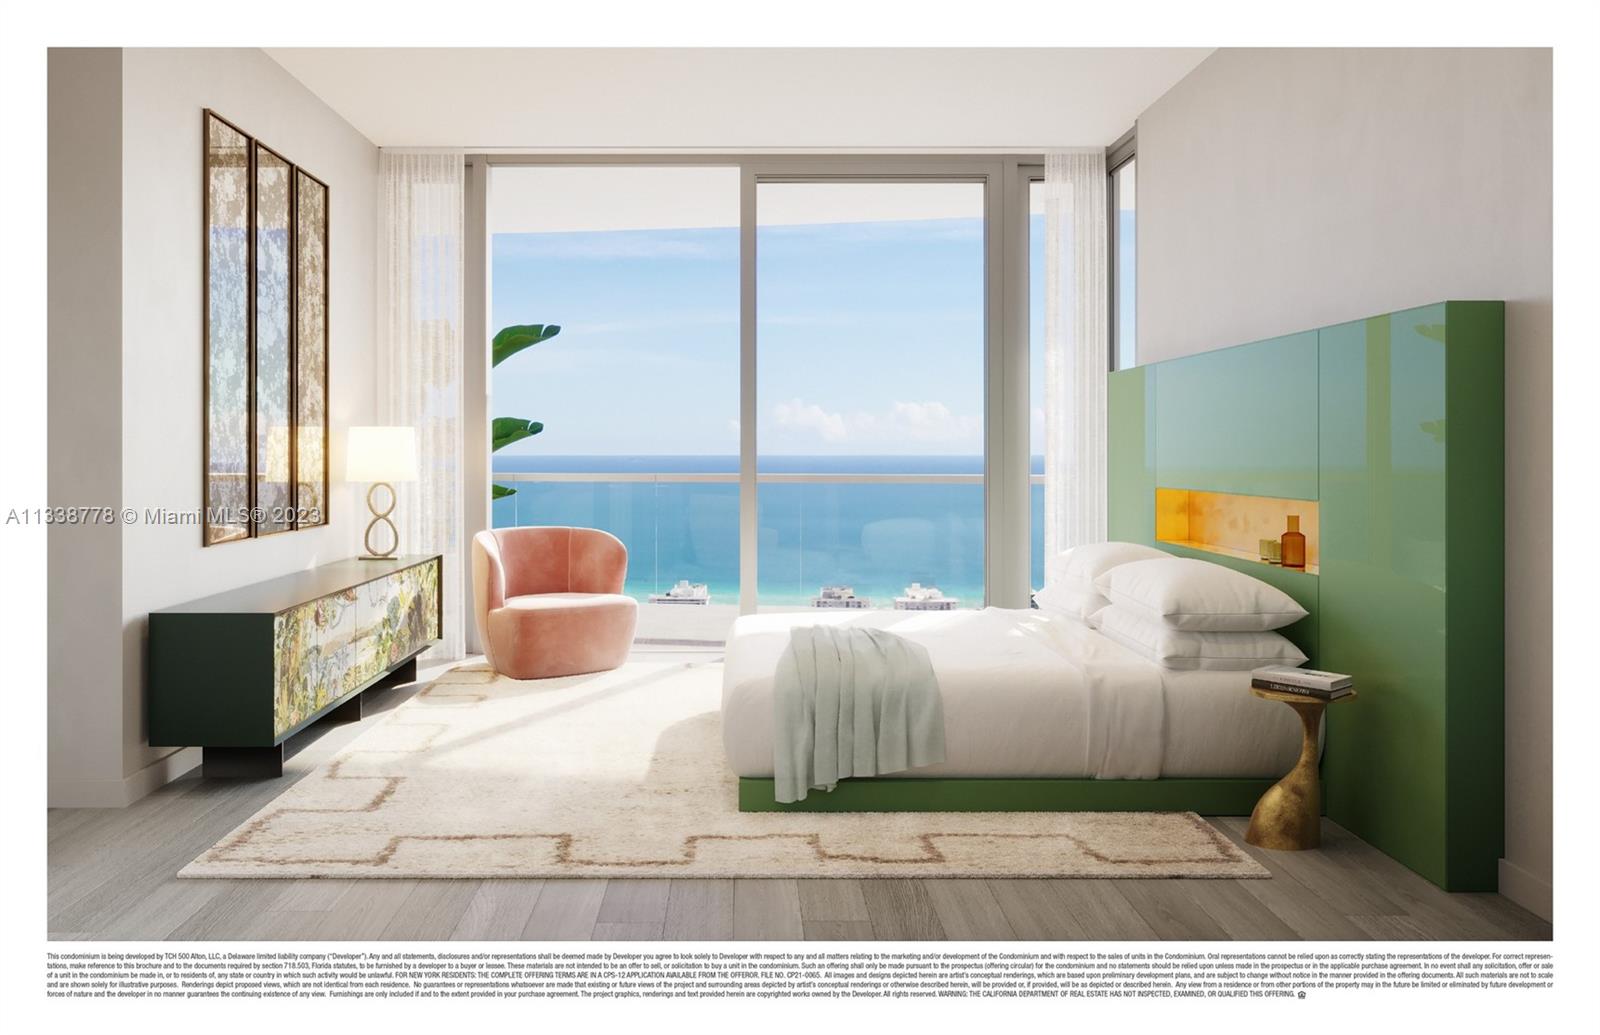 Property for Sale at 500 Alton Ct 2905, Miami Beach, Miami-Dade County, Florida - Bedrooms: 3 
Bathrooms: 4  - $4,250,000